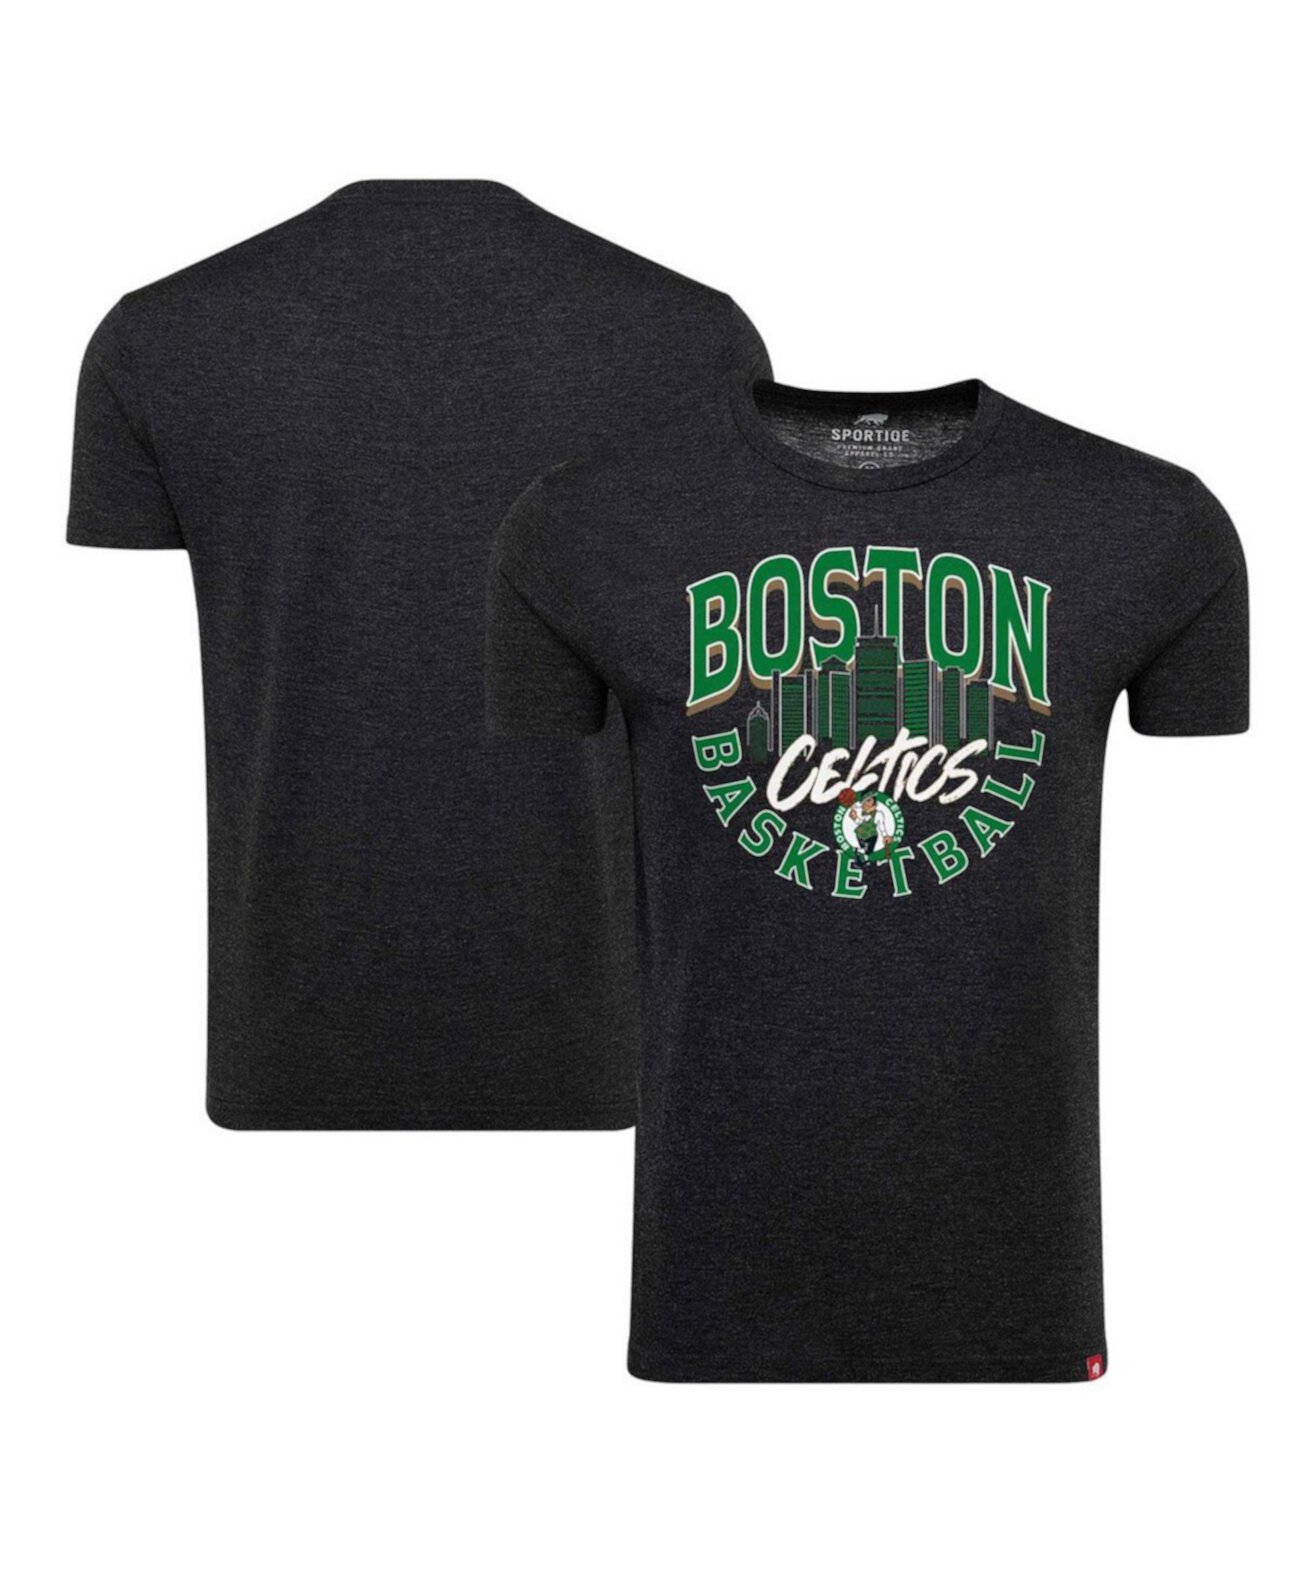 Men's and Women's Heather Black Boston Celtics Comfy Super Soft Tri-Blend T-Shirt Sportiqe